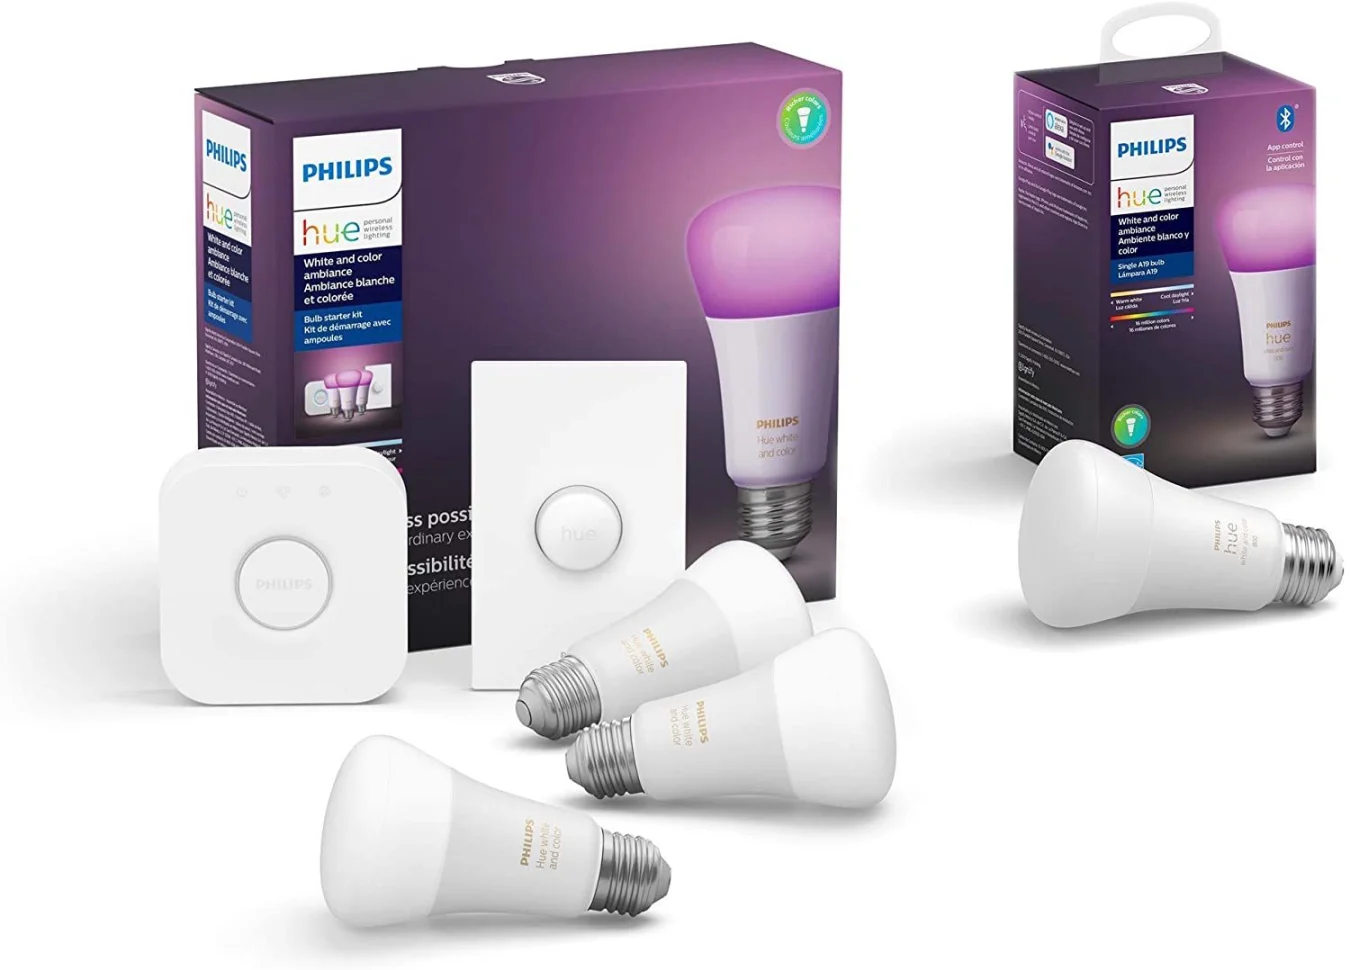 Philips Hue smart light bulbs